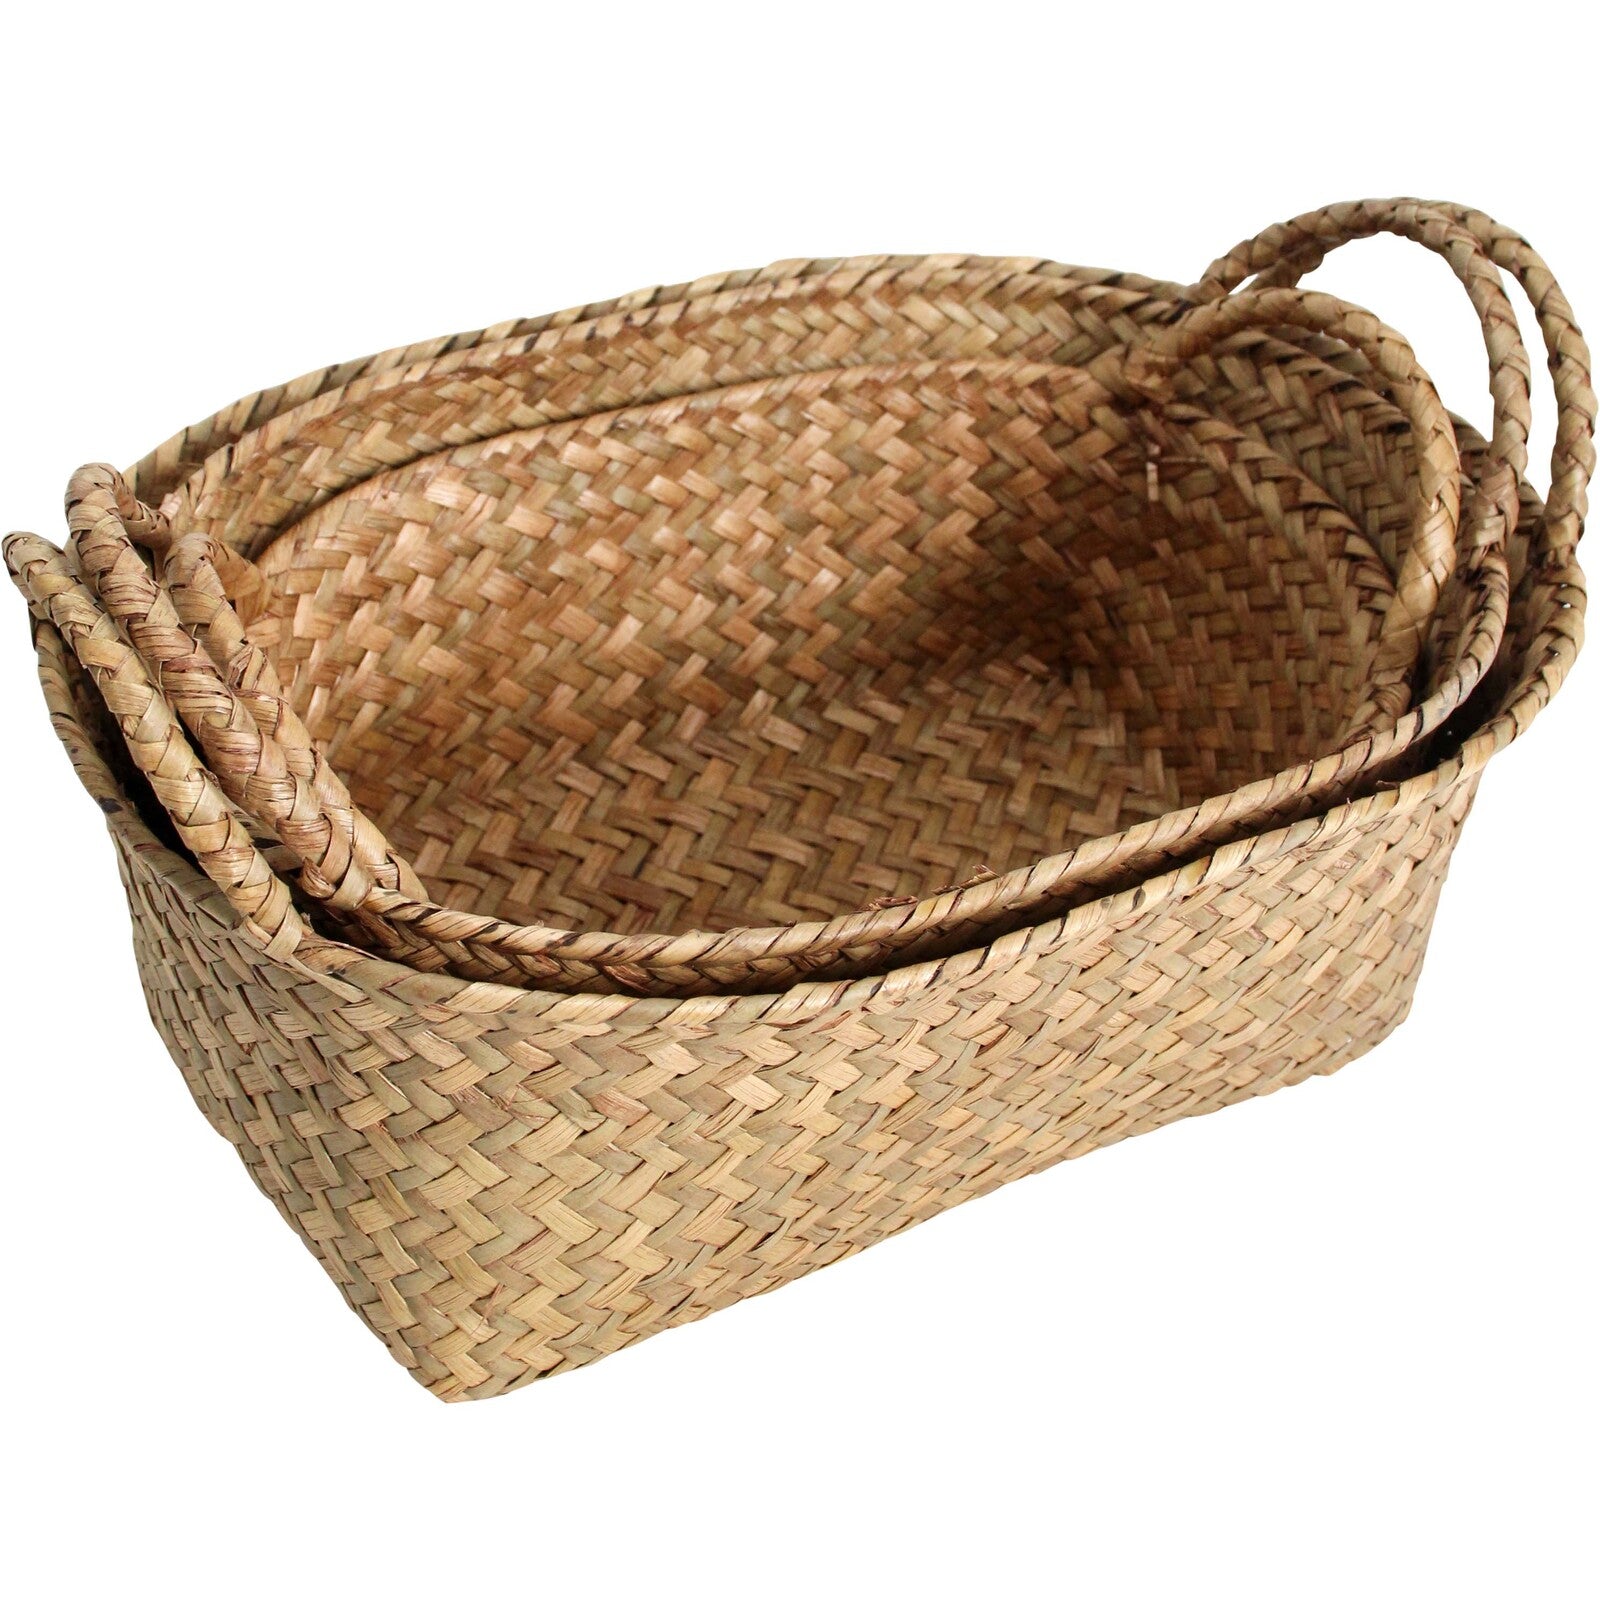 Woven Oval Basket Set of 3 - Natural